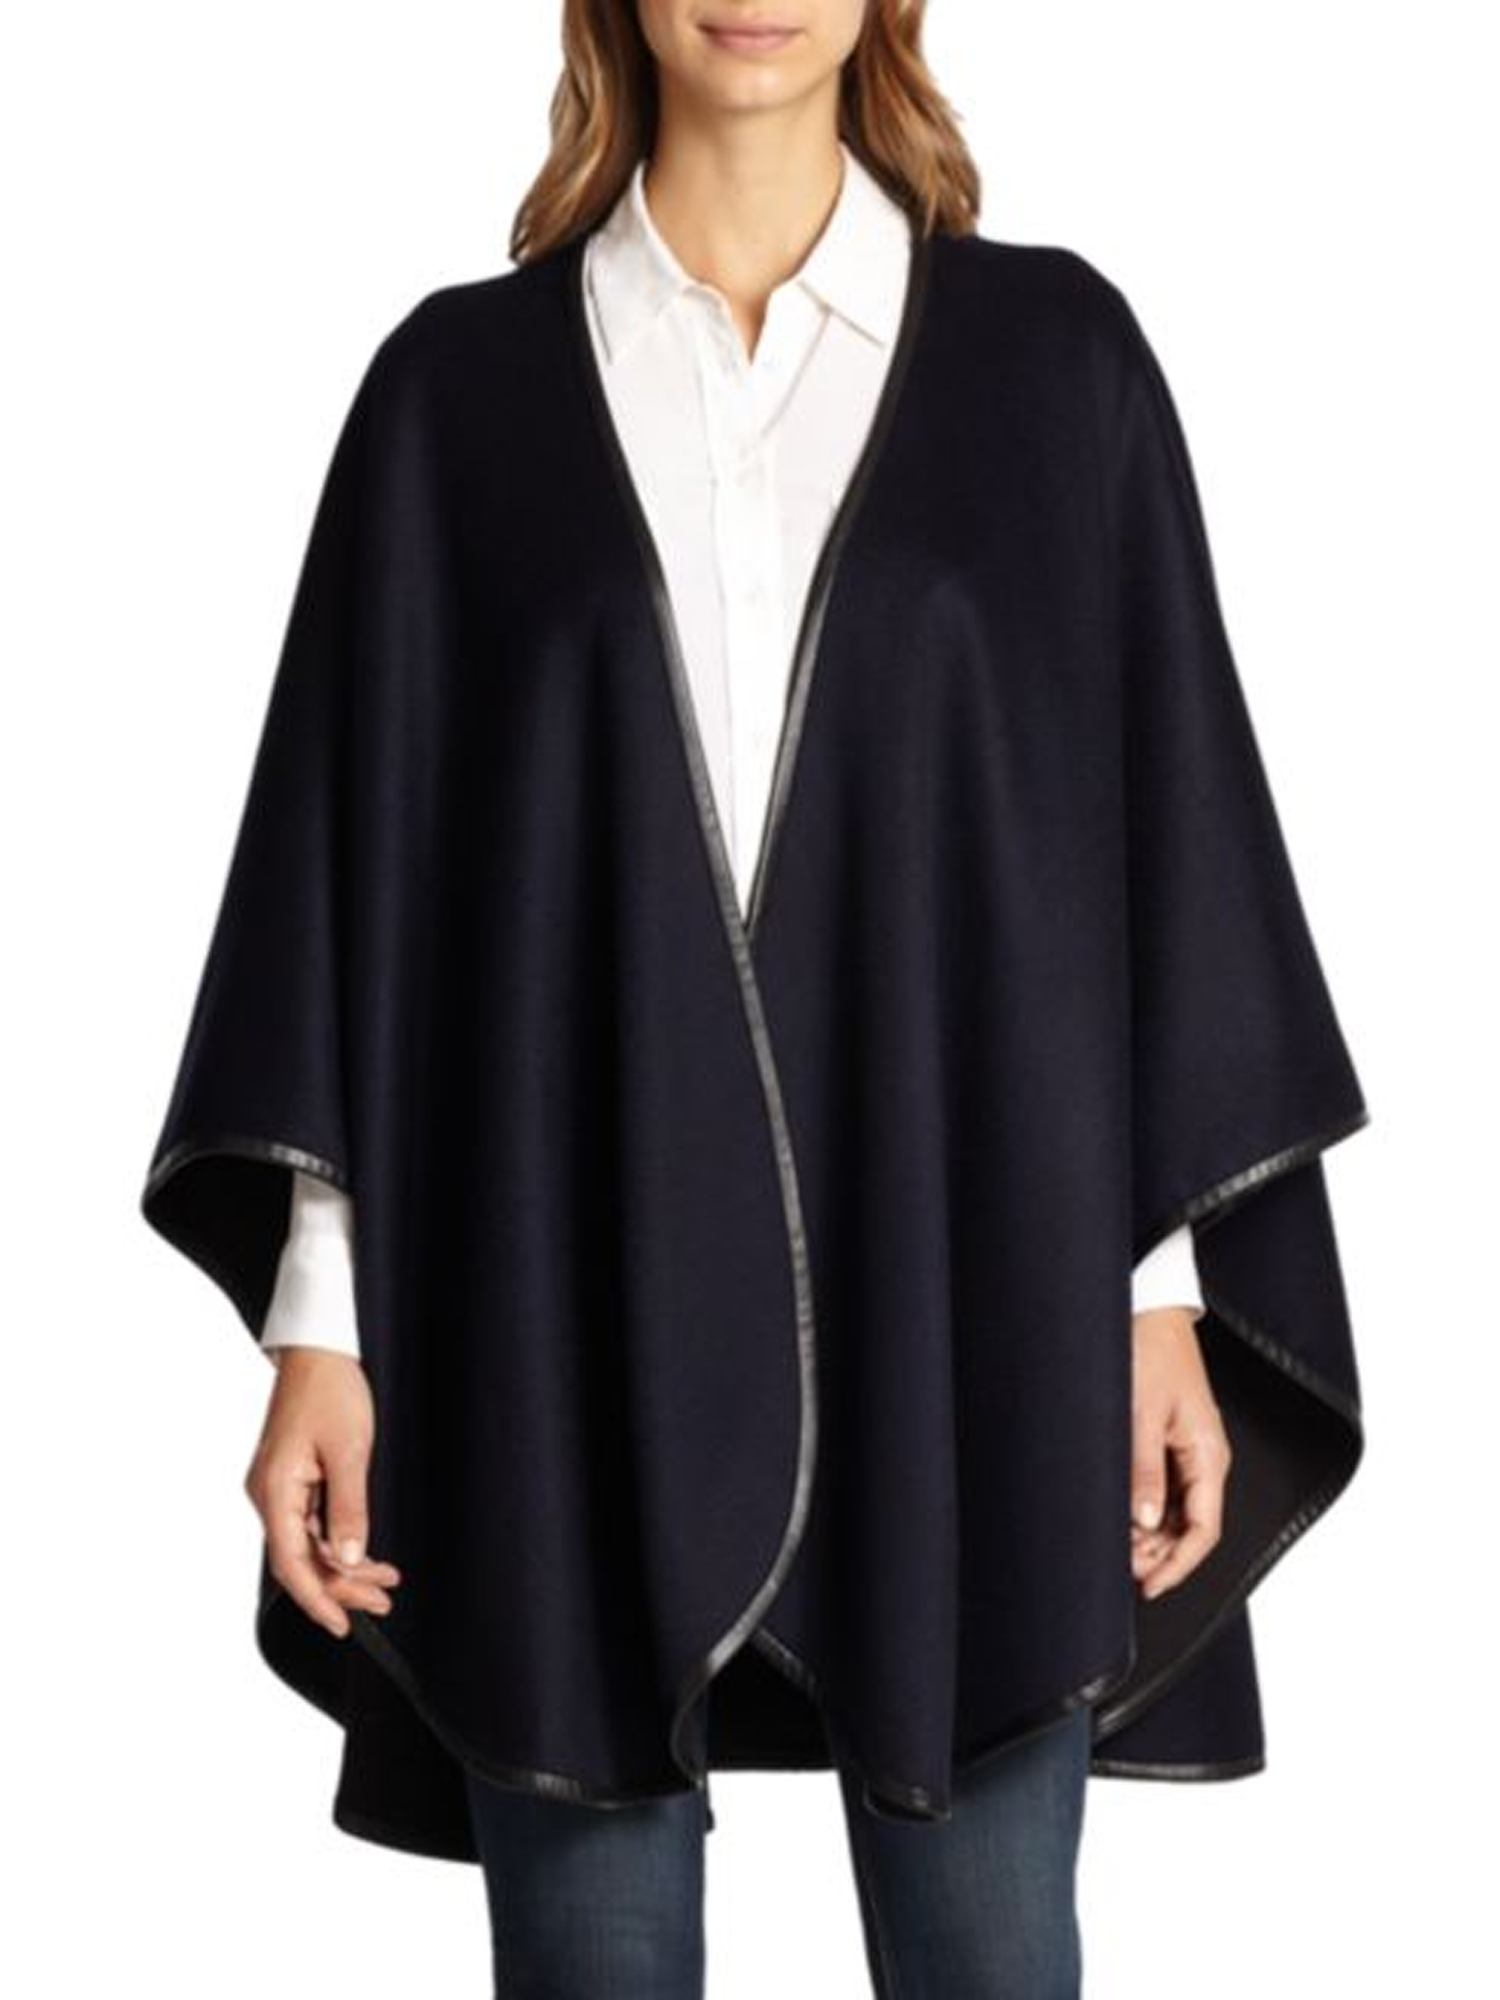 Cashmere Cape with Fur Trim/Cashmere Cape/Cashmere Capes/Cape/Capes/Fur Cape/Fur Capes for women/Capes and Shawls/Fur Caplet/Caplet/Coat/Poncho/Shrug/Ruana (Leather Trim-NAVY) - image 3 of 10